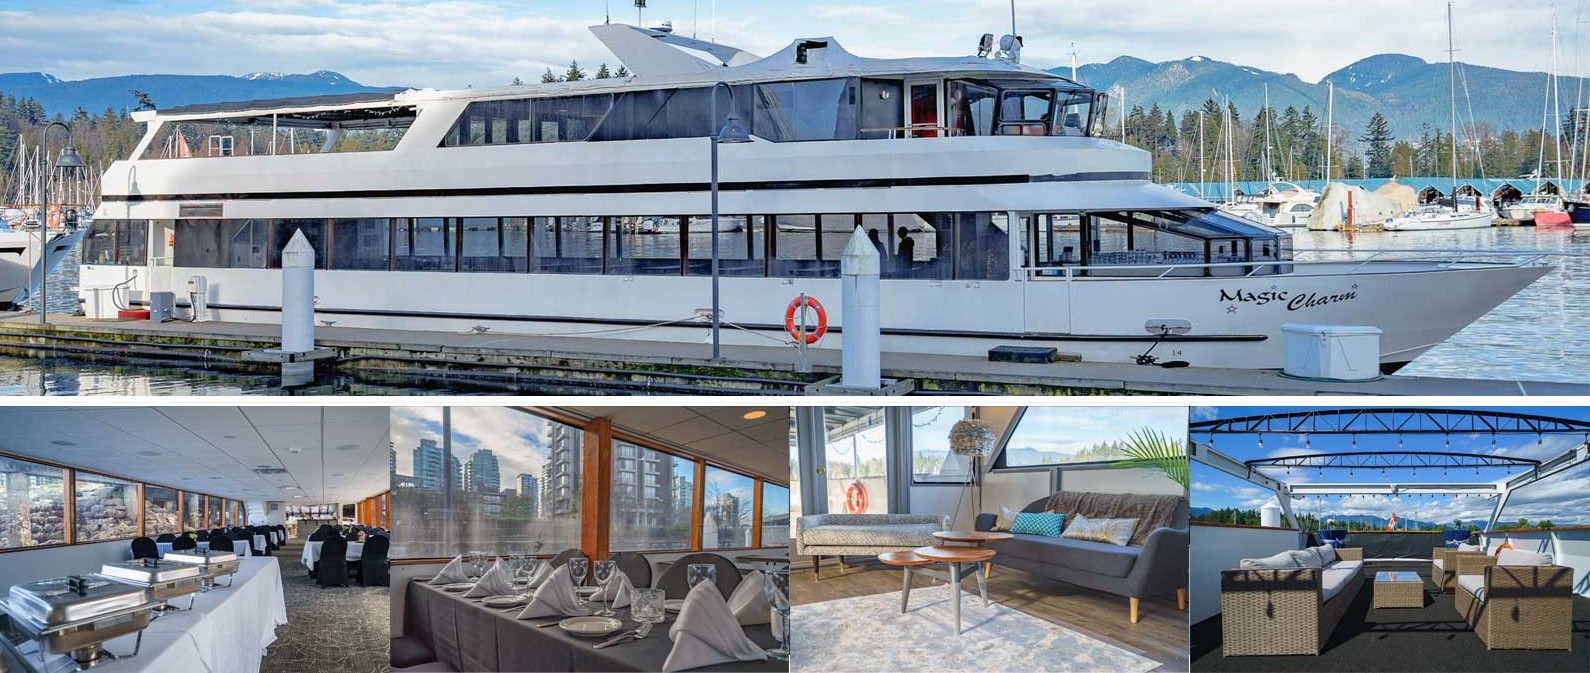 luxury yacht vancouver bc